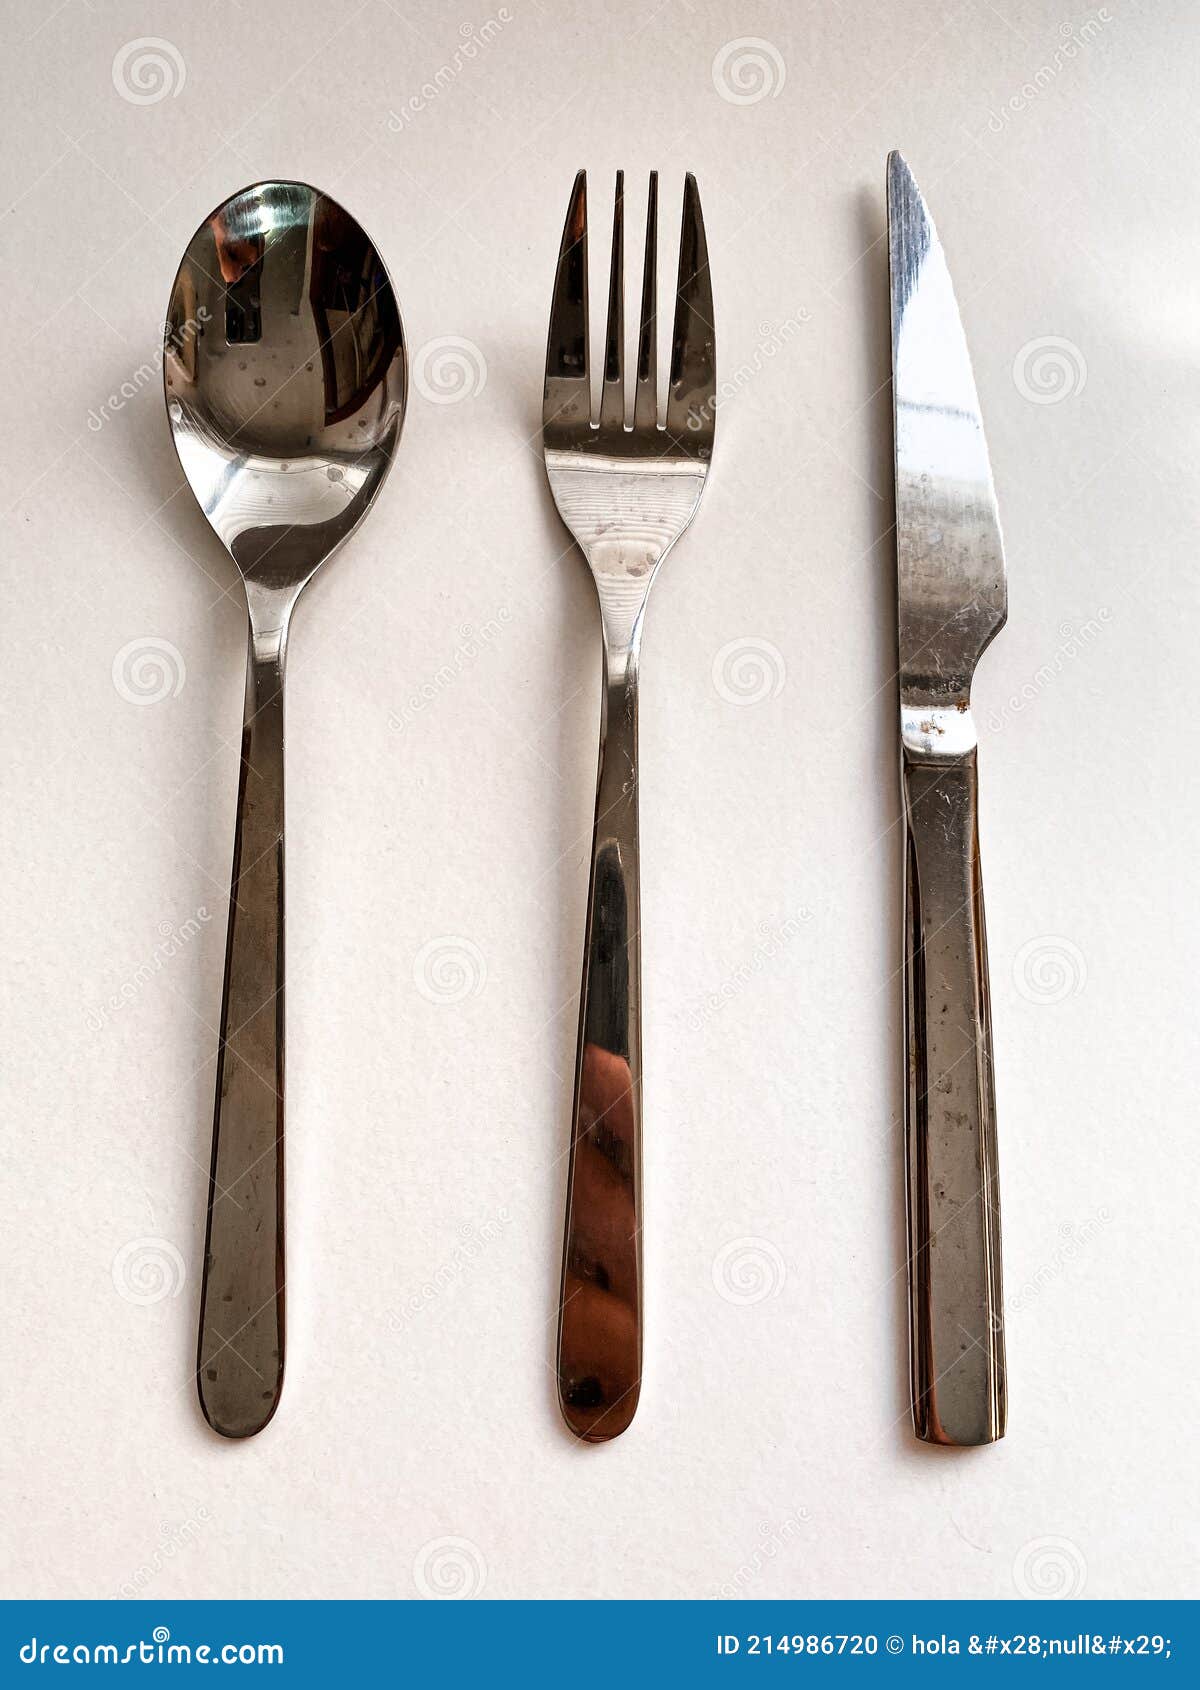 cutlery fork knife spoon cubiertos tenedor cuchillo cuchara